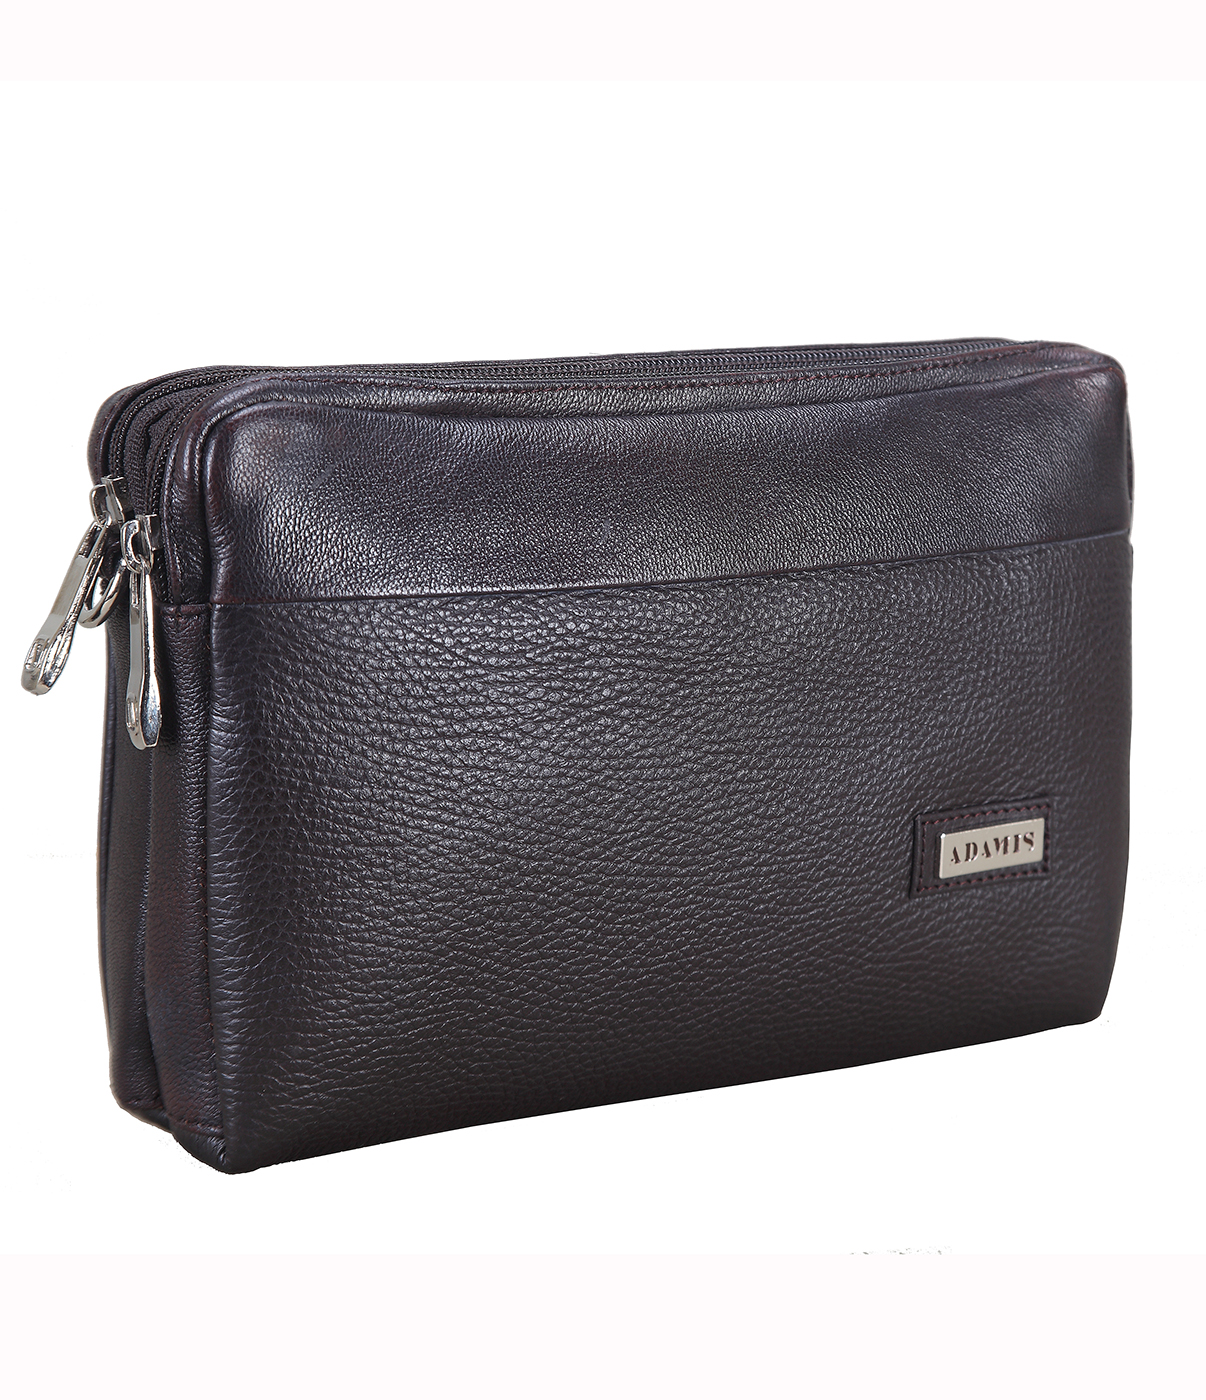 Bag-Fernando-Men's bag cum travel pouch in Genuine Leather - Brown